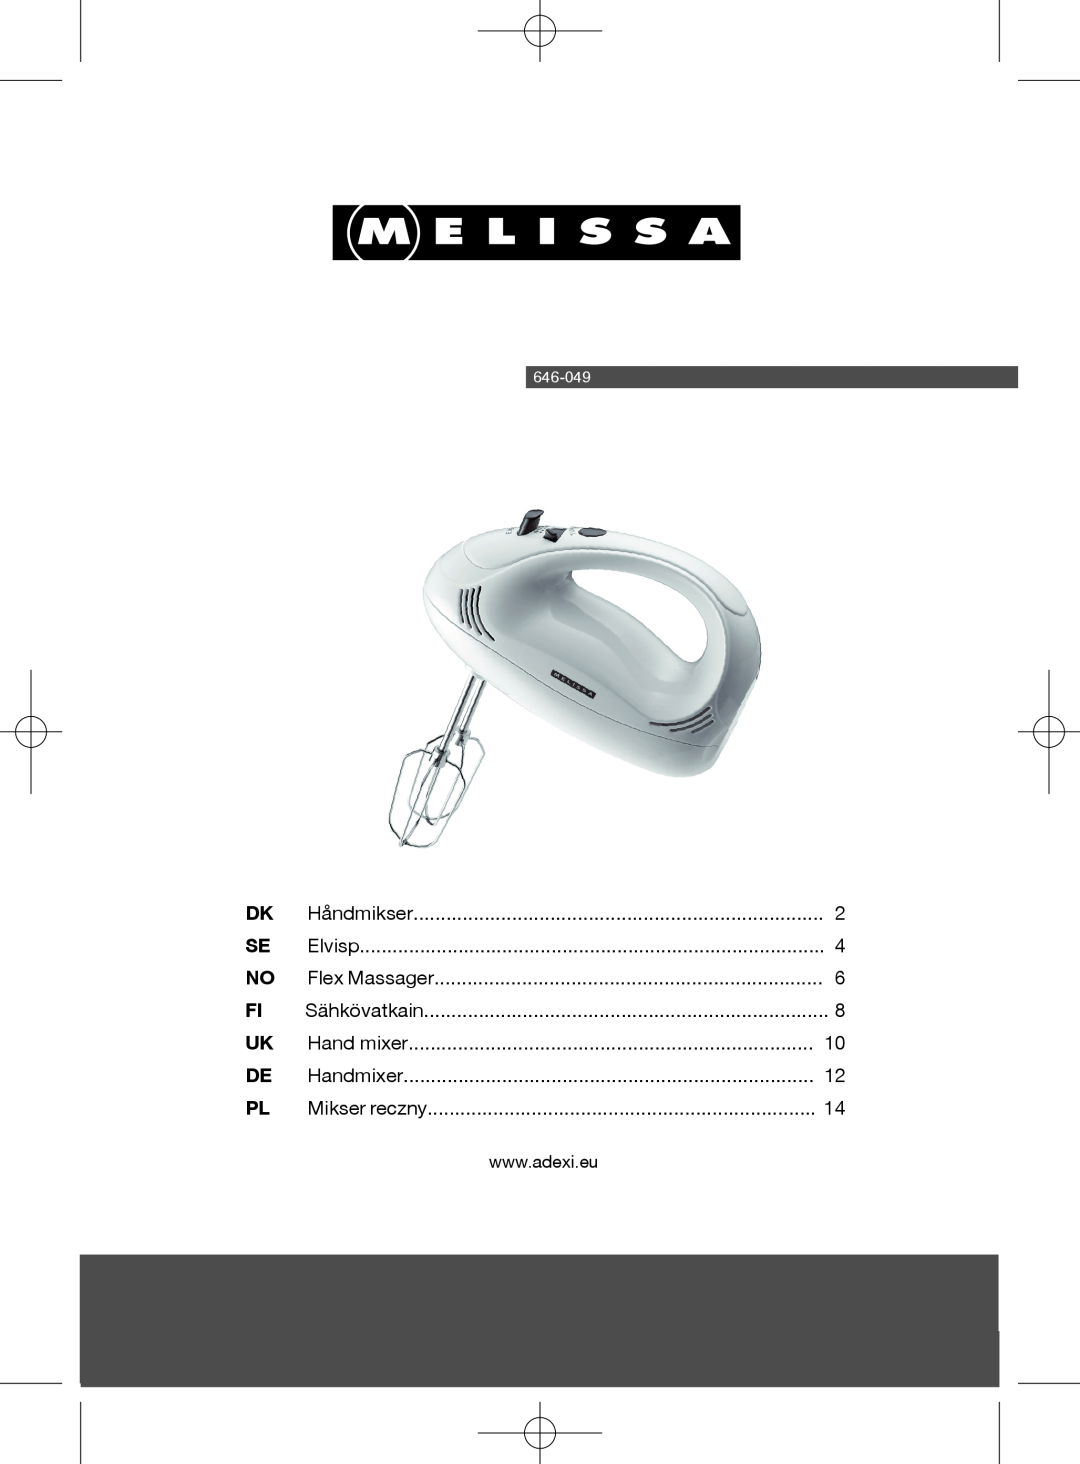 Melissa 646-049 manual Håndmikser, Elvisp, Flex Massager, Sähkövatkain, Hand mixer, Handmixer, Mikser reczny 